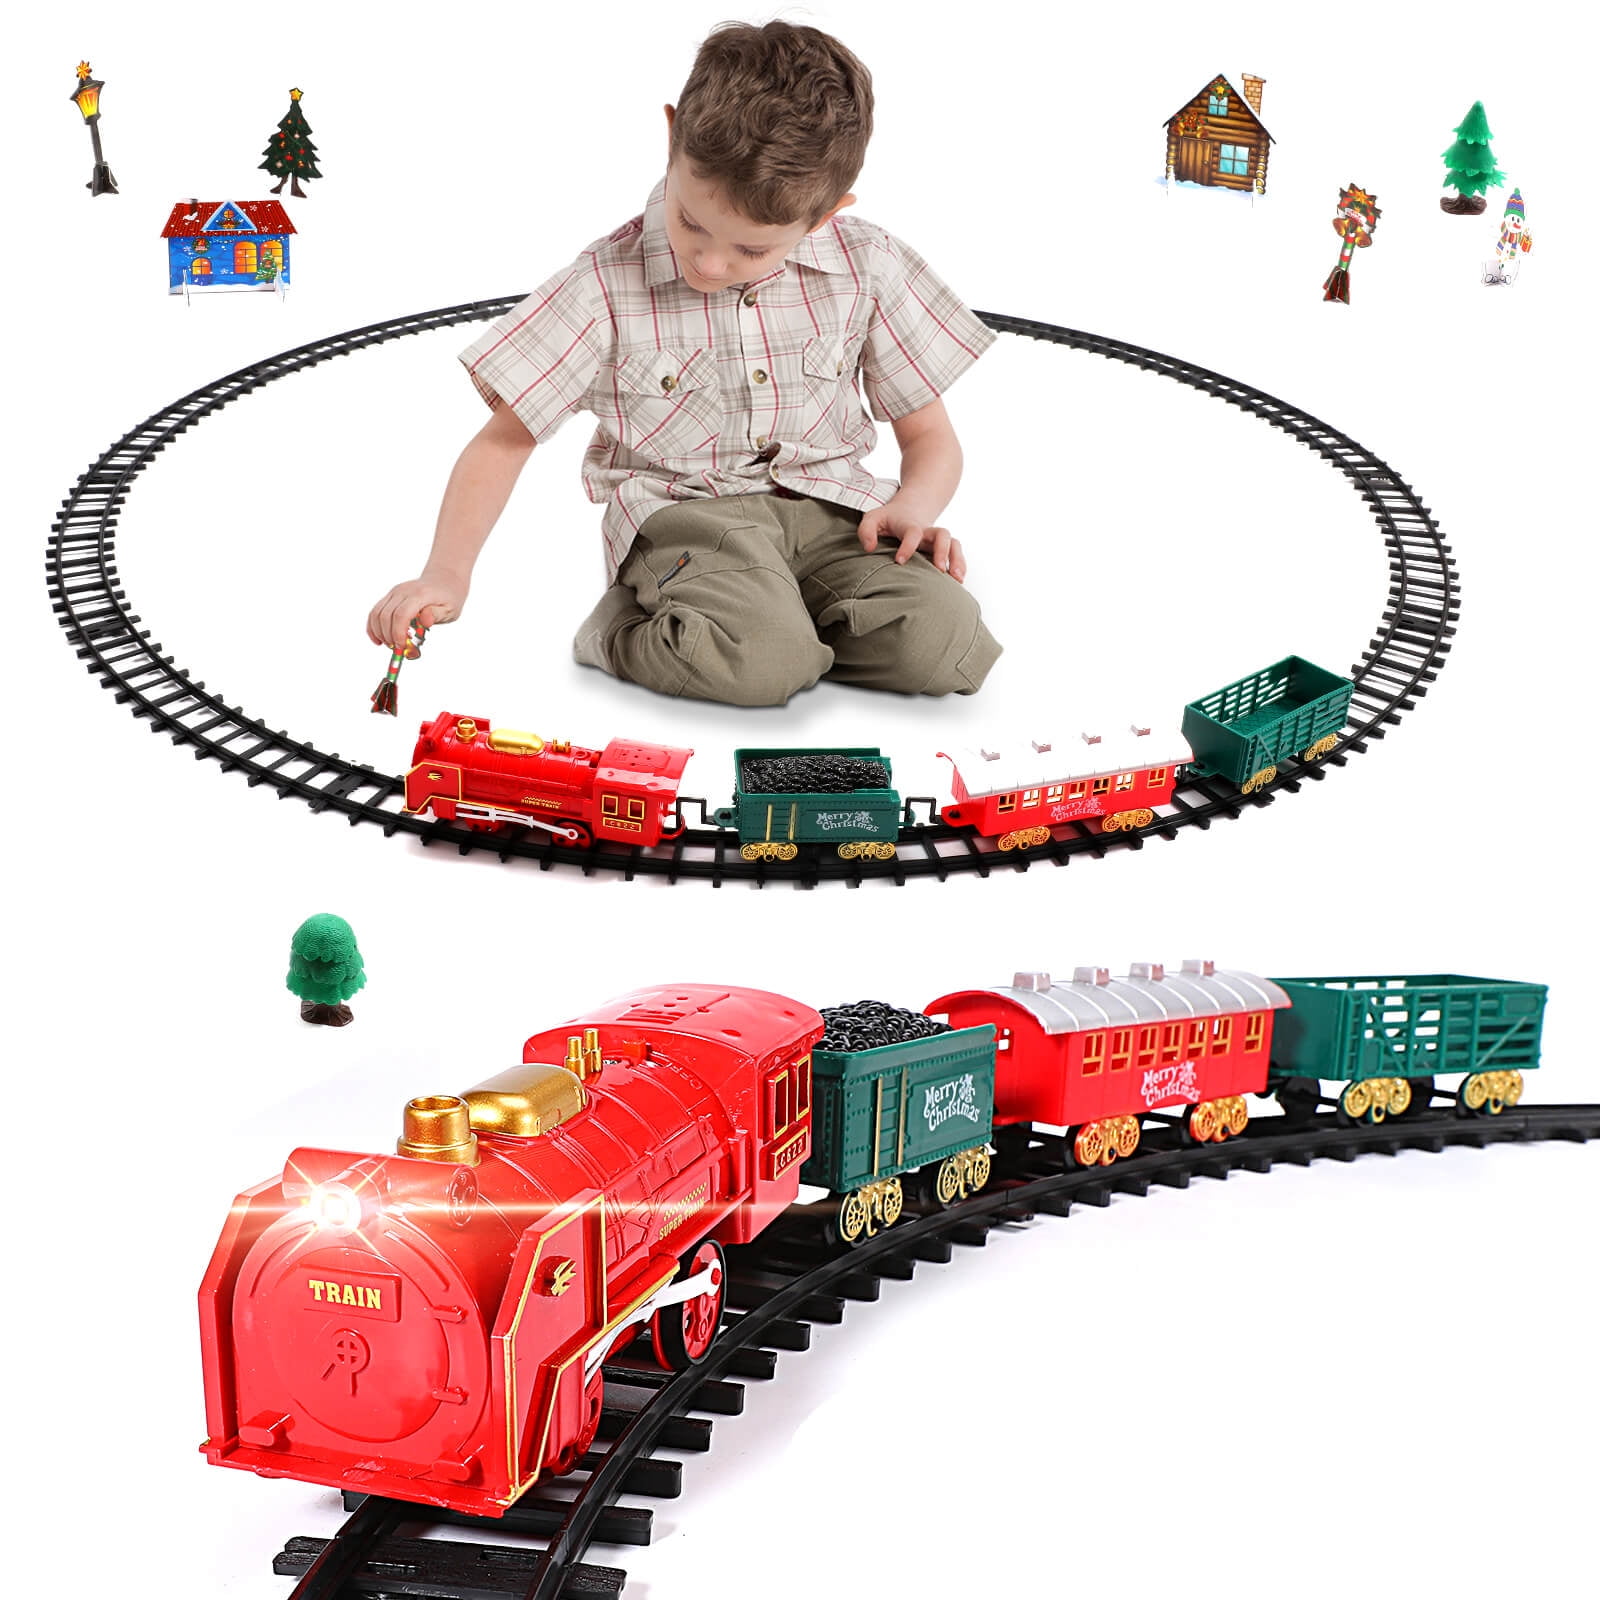 Xayah Classic Train Set, Electric Train Toy W/ Lights & Music, Railway Kits  W/ Locomotive Engine, Cargo Cars & Tracks, Around The Christmas Tree,  Christmas Gifts For Kids Boys Girls (Red) -